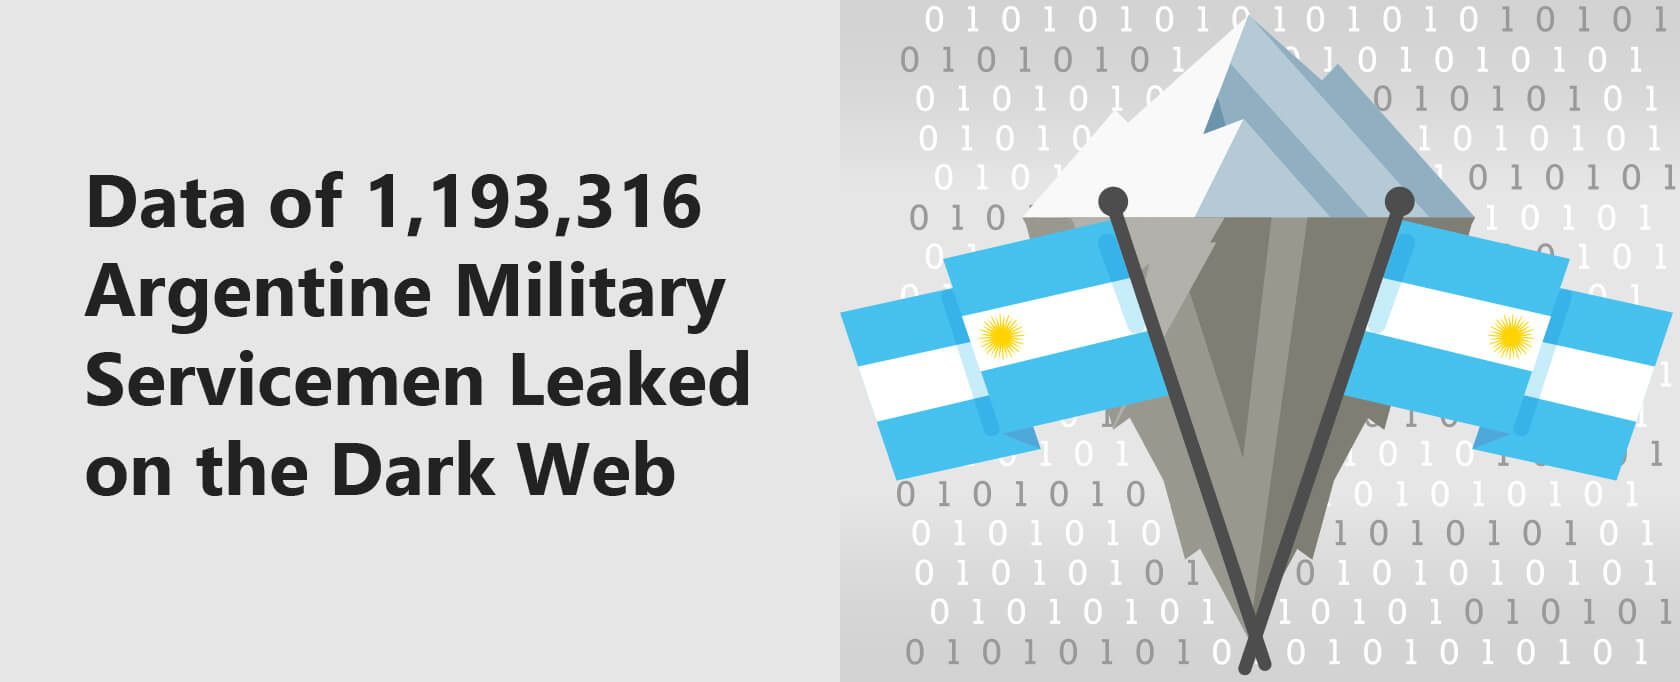 Data of 1,193,316 Argentine Military Servicemen Leaked on the Dark Web